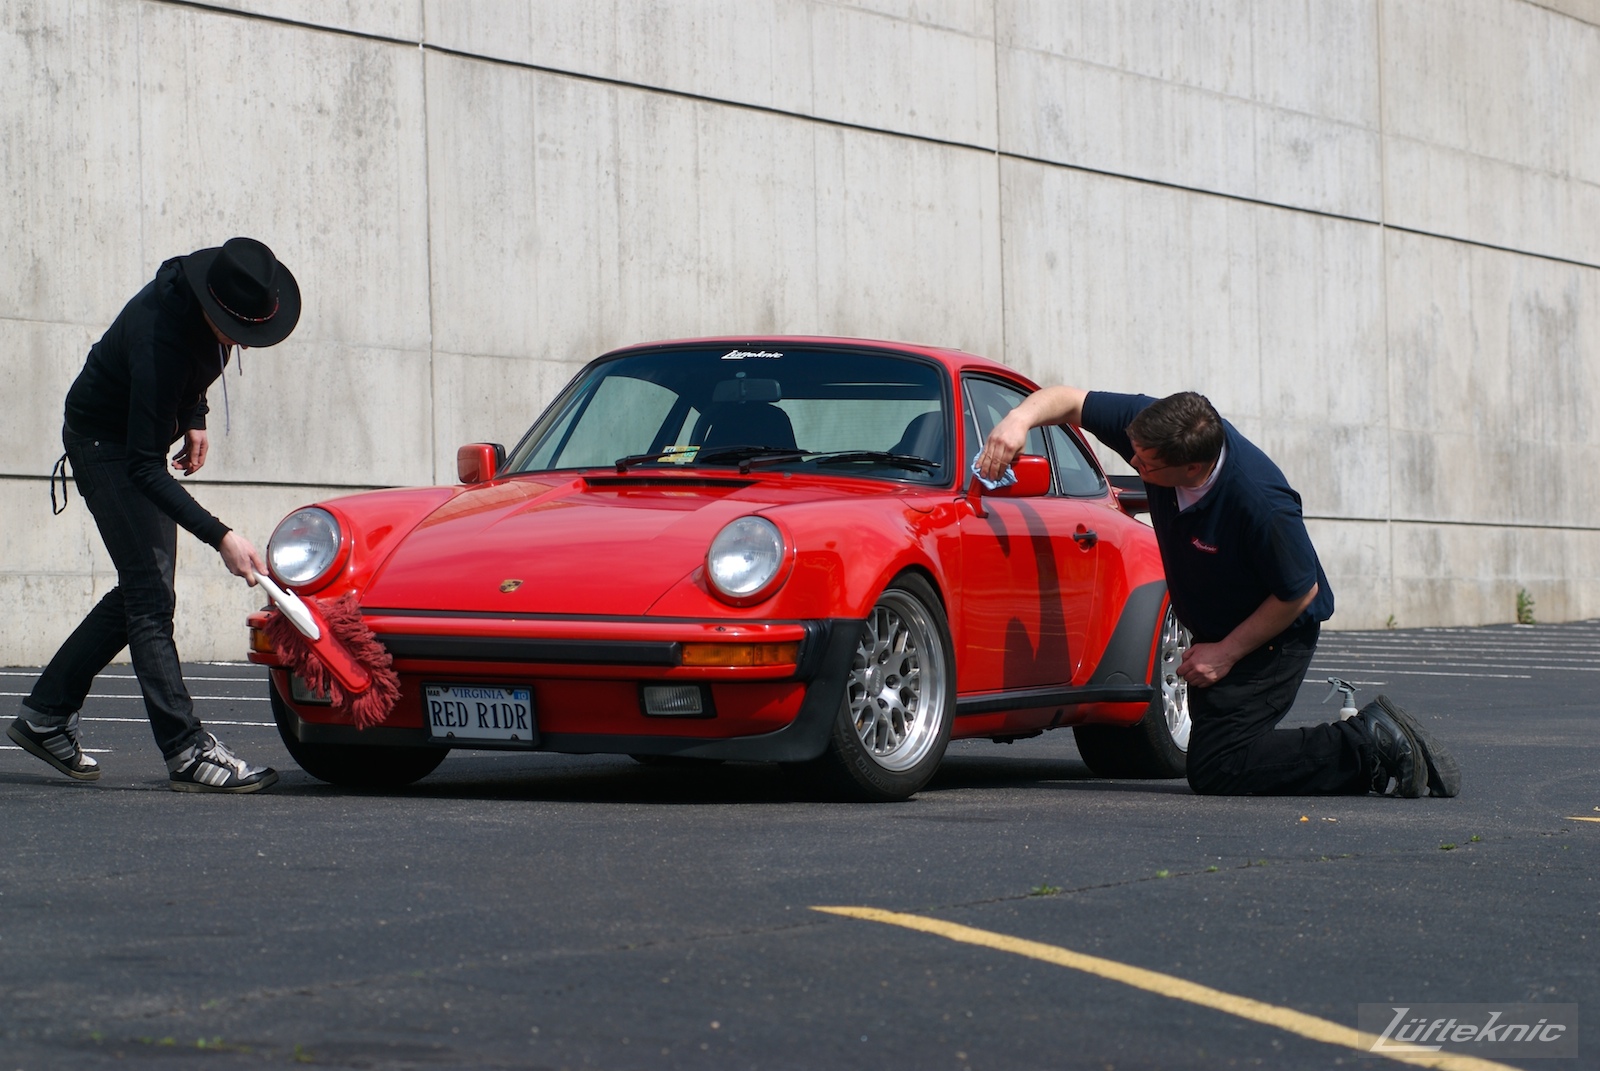 Red Porsche 930 Turbo being detailed.